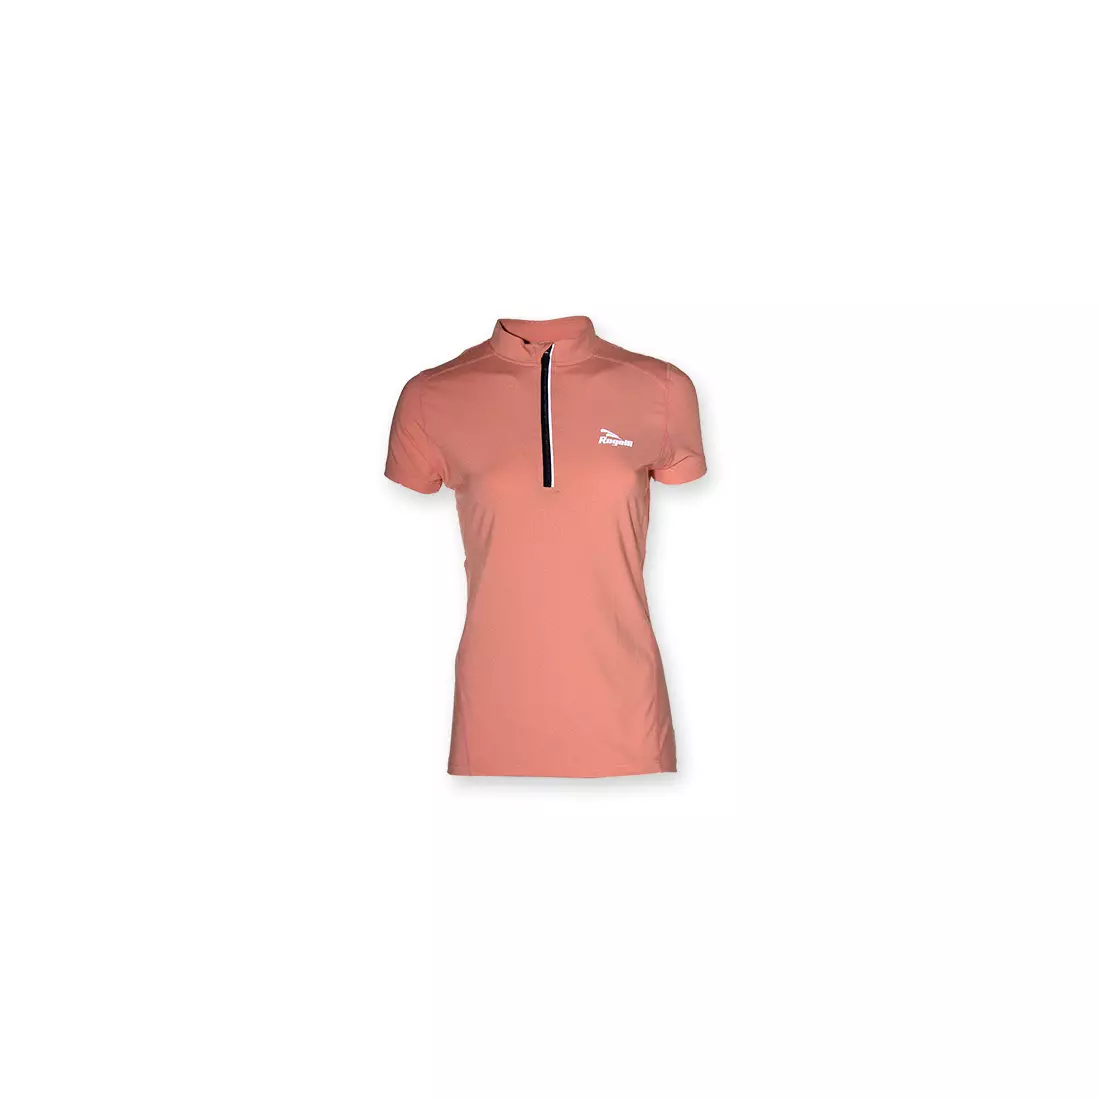 ROGELLI RUN MABYN - Damen-Lauf-T-Shirt, Farbe: Rot meliert